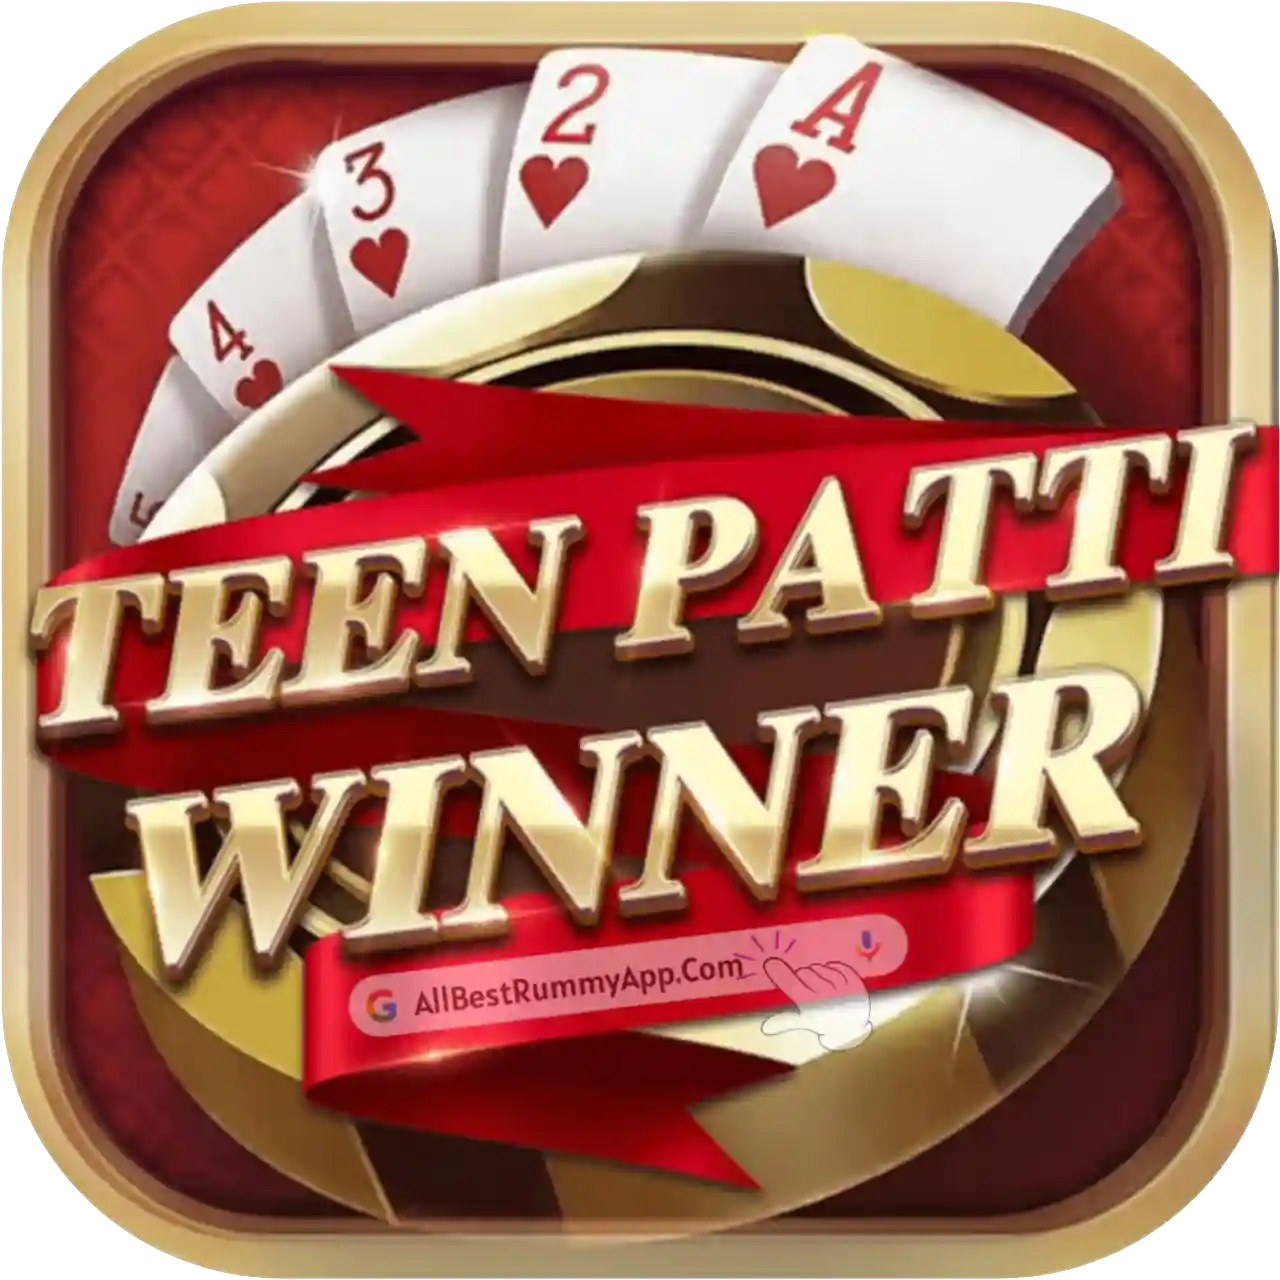 Teen Patti Winner App - India Game Download